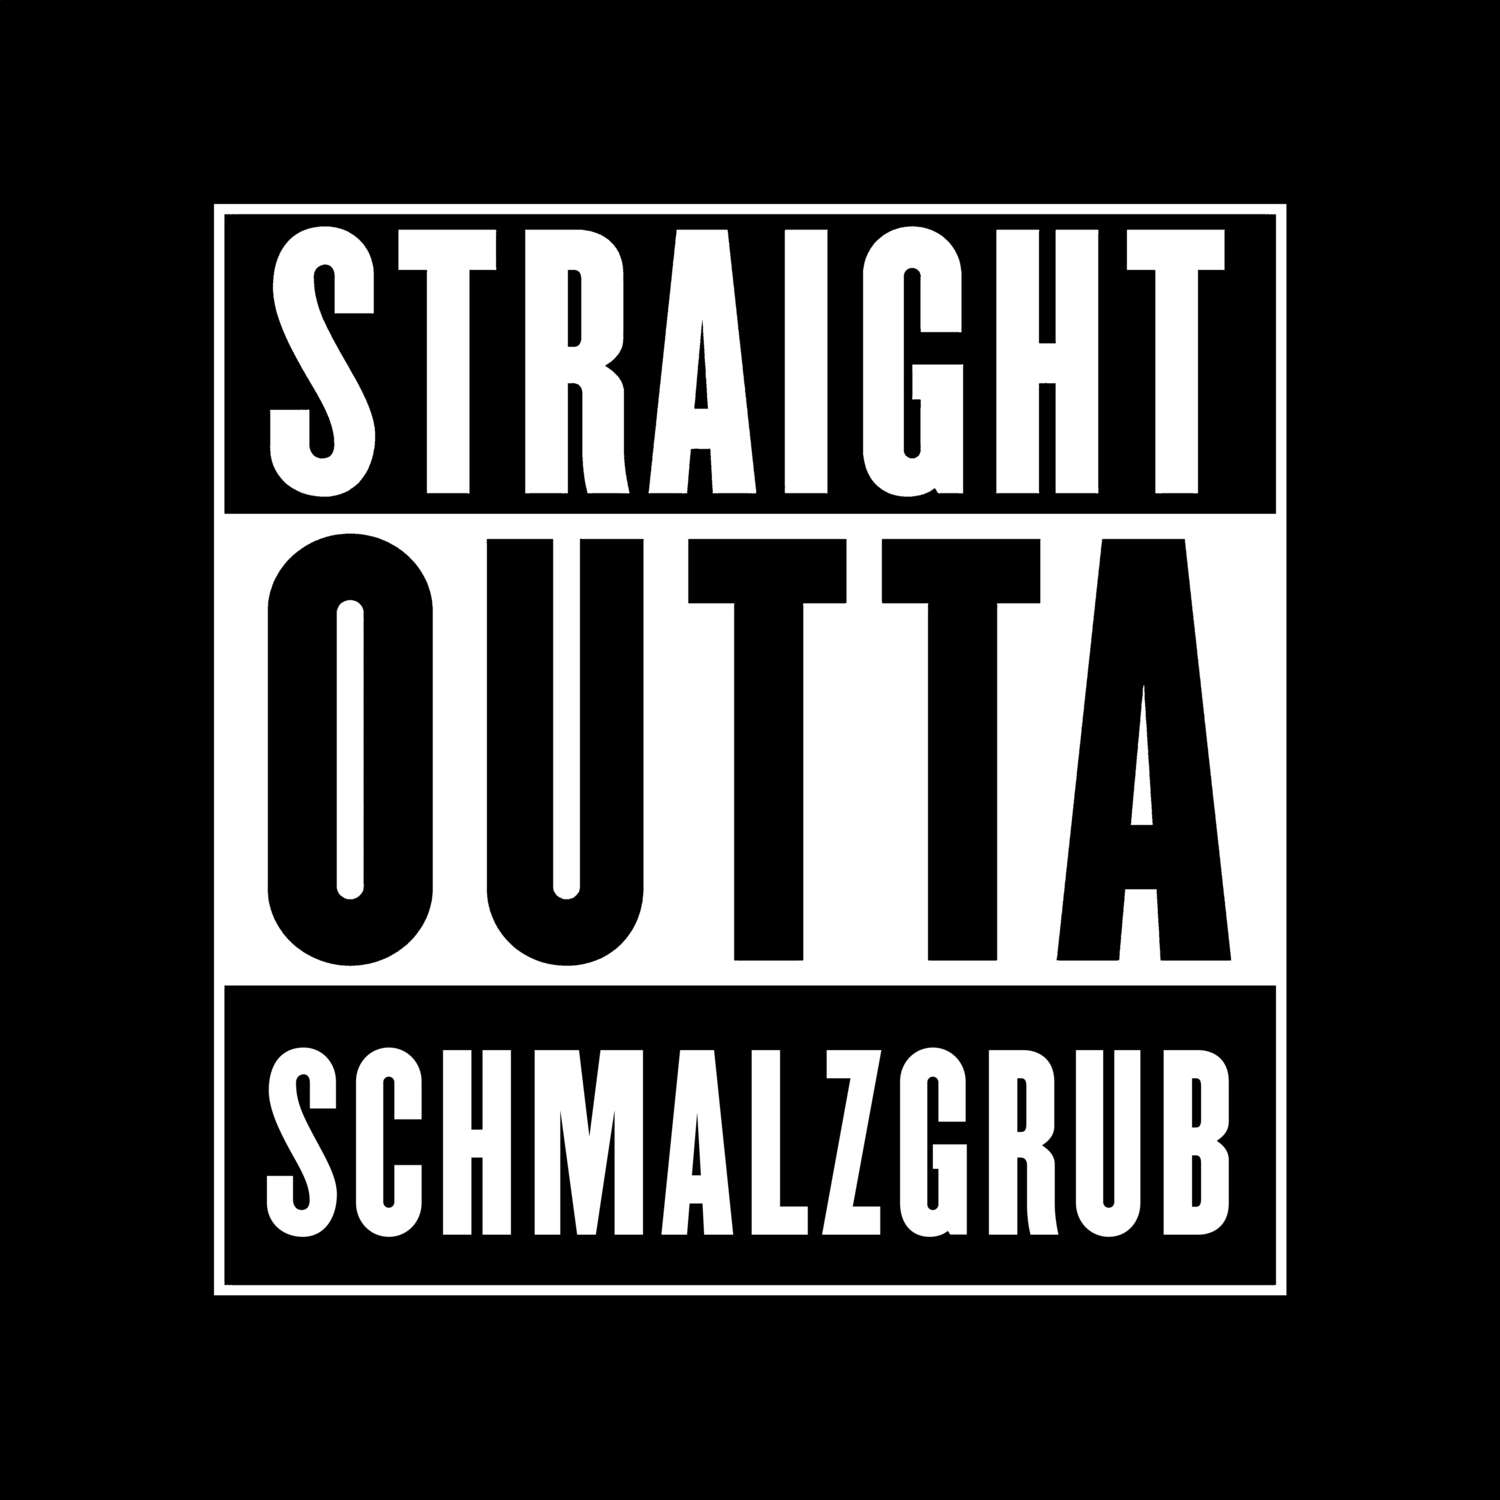 Schmalzgrub T-Shirt »Straight Outta«